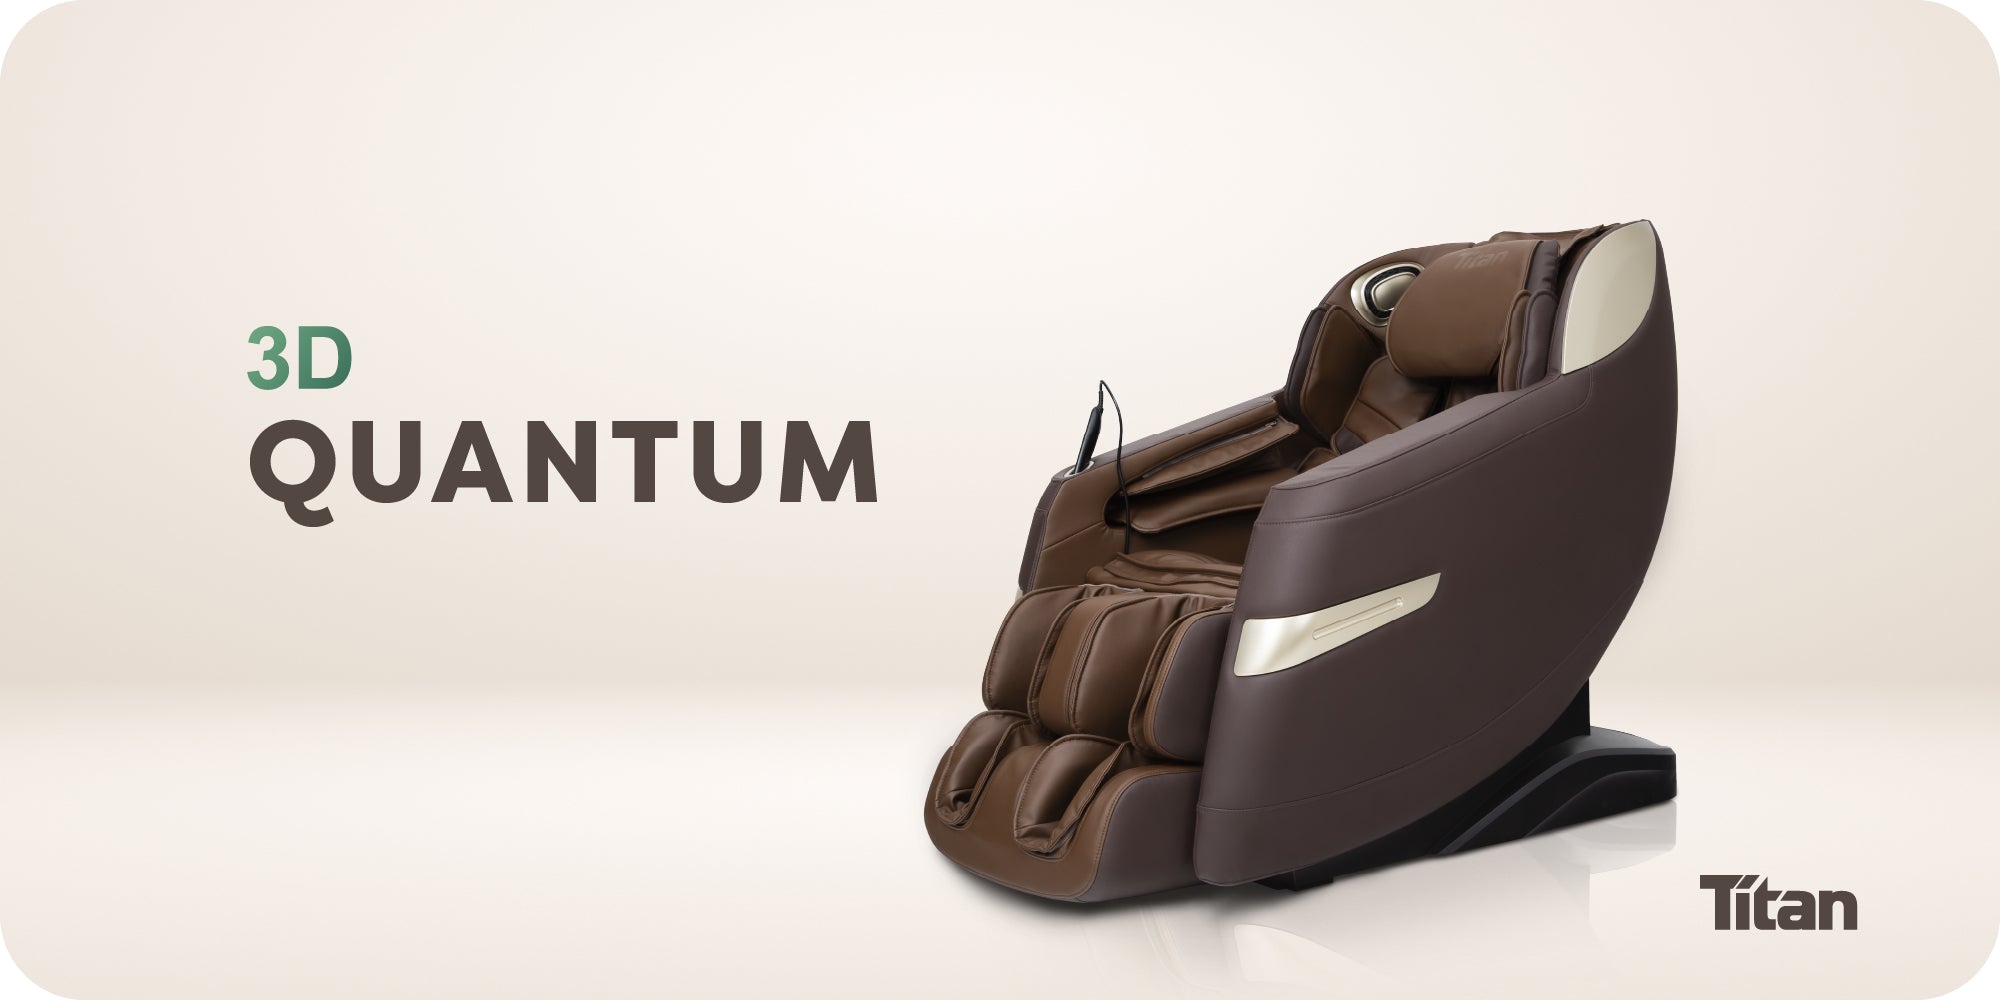 Titan 3D Quantum Full Body Massage Chair, Overview